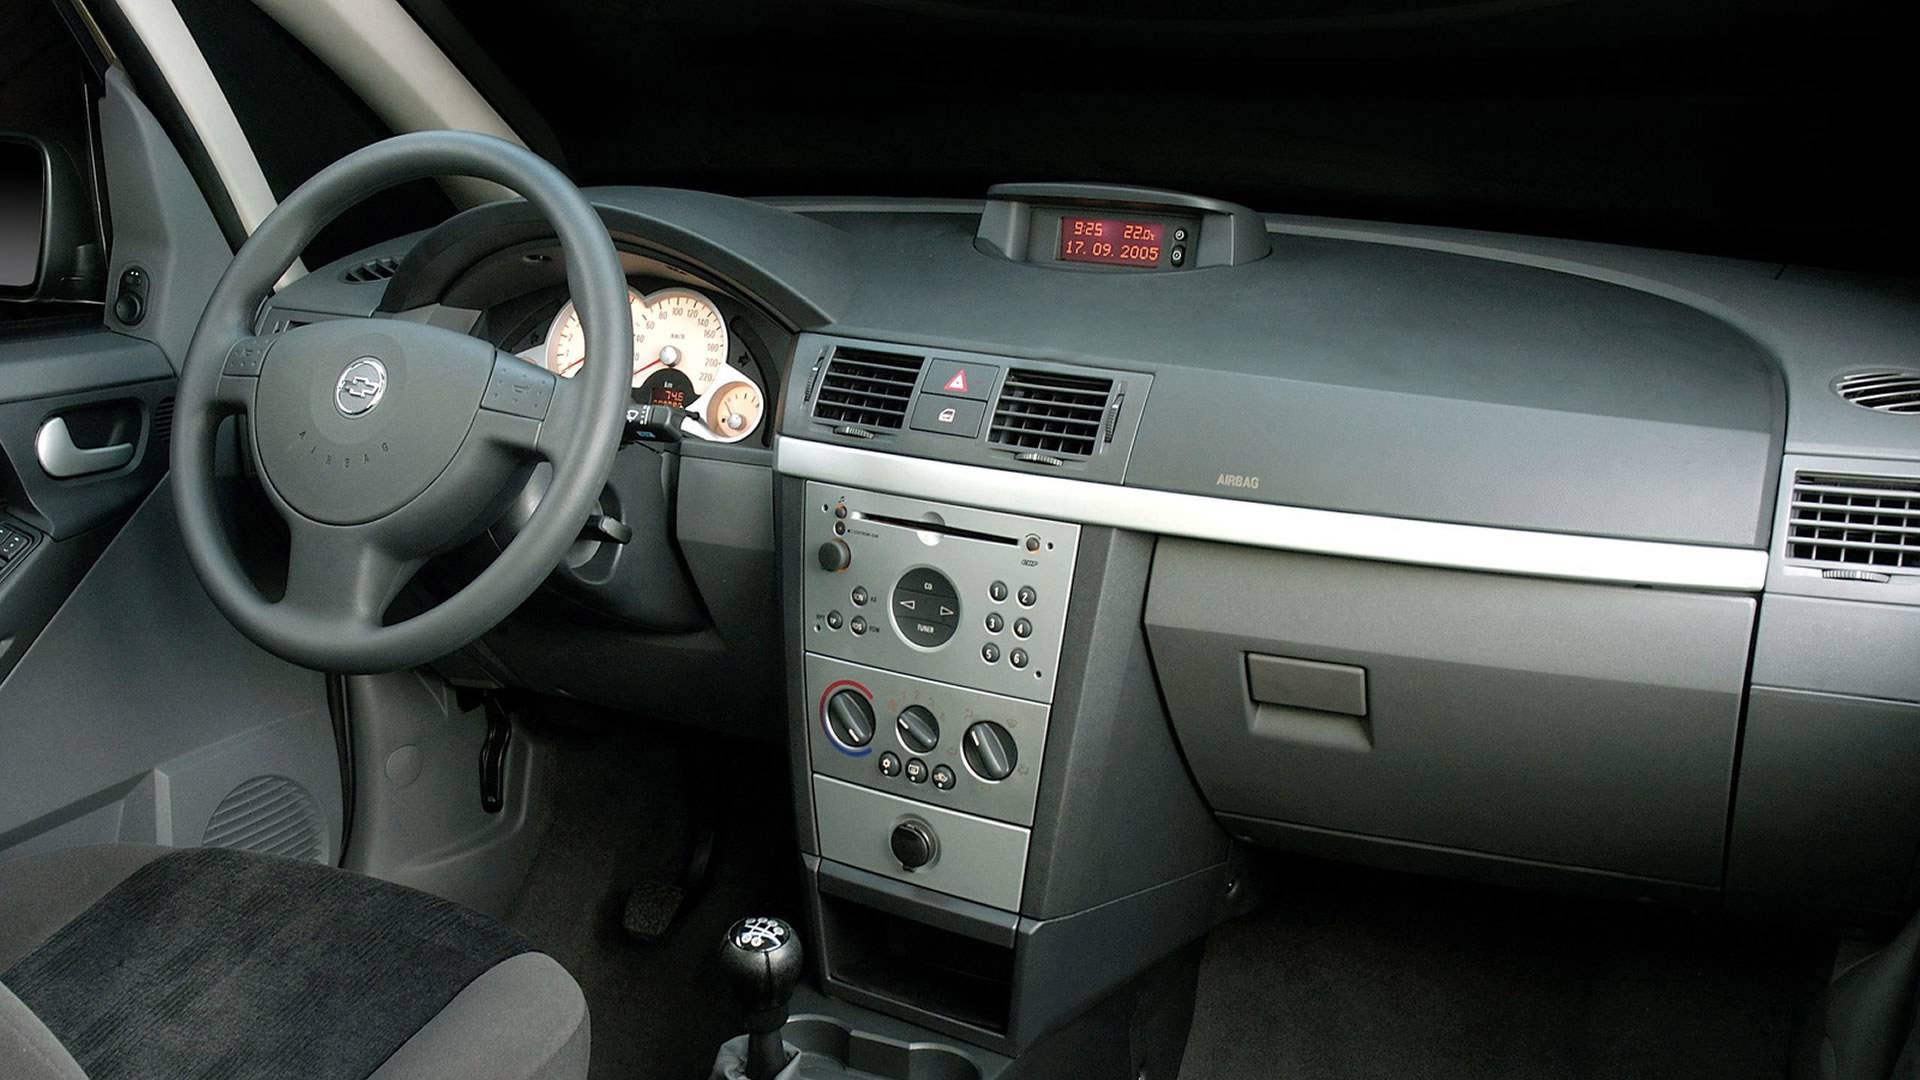 Chevrolet Meriva interior